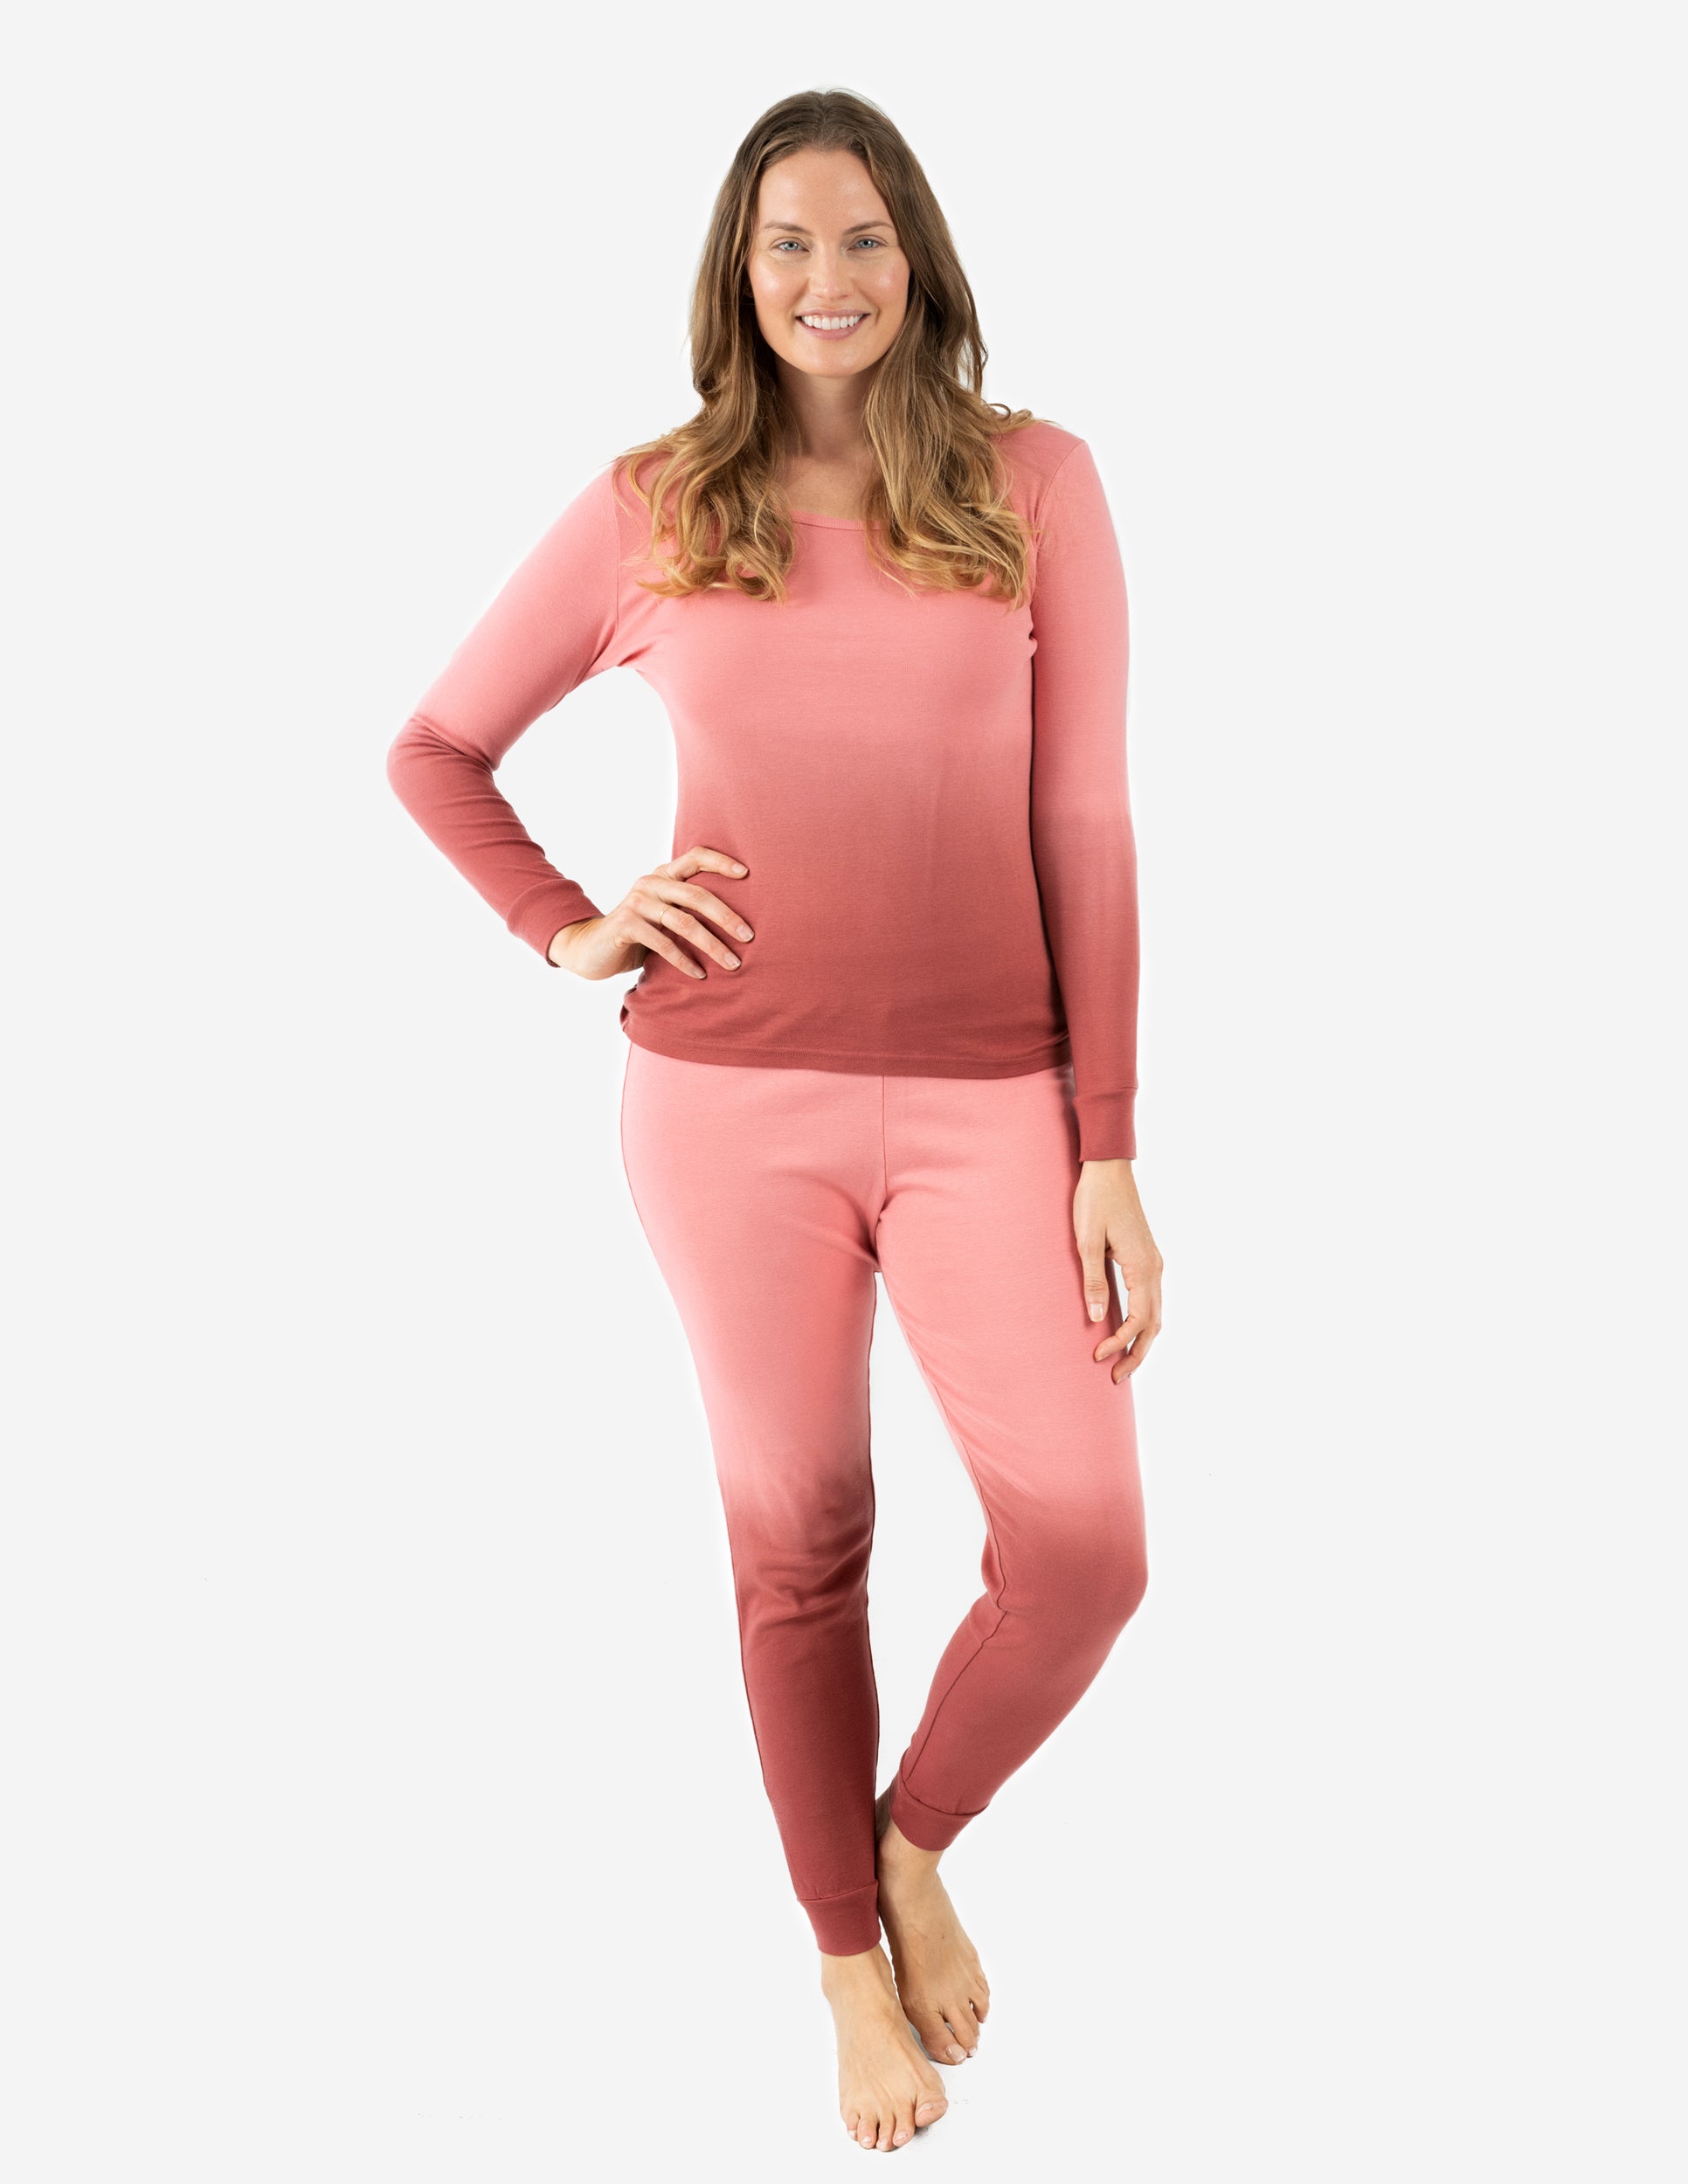 Thermal Pajamas Santa Pajamas For Women Pyjama For Pregnant Women